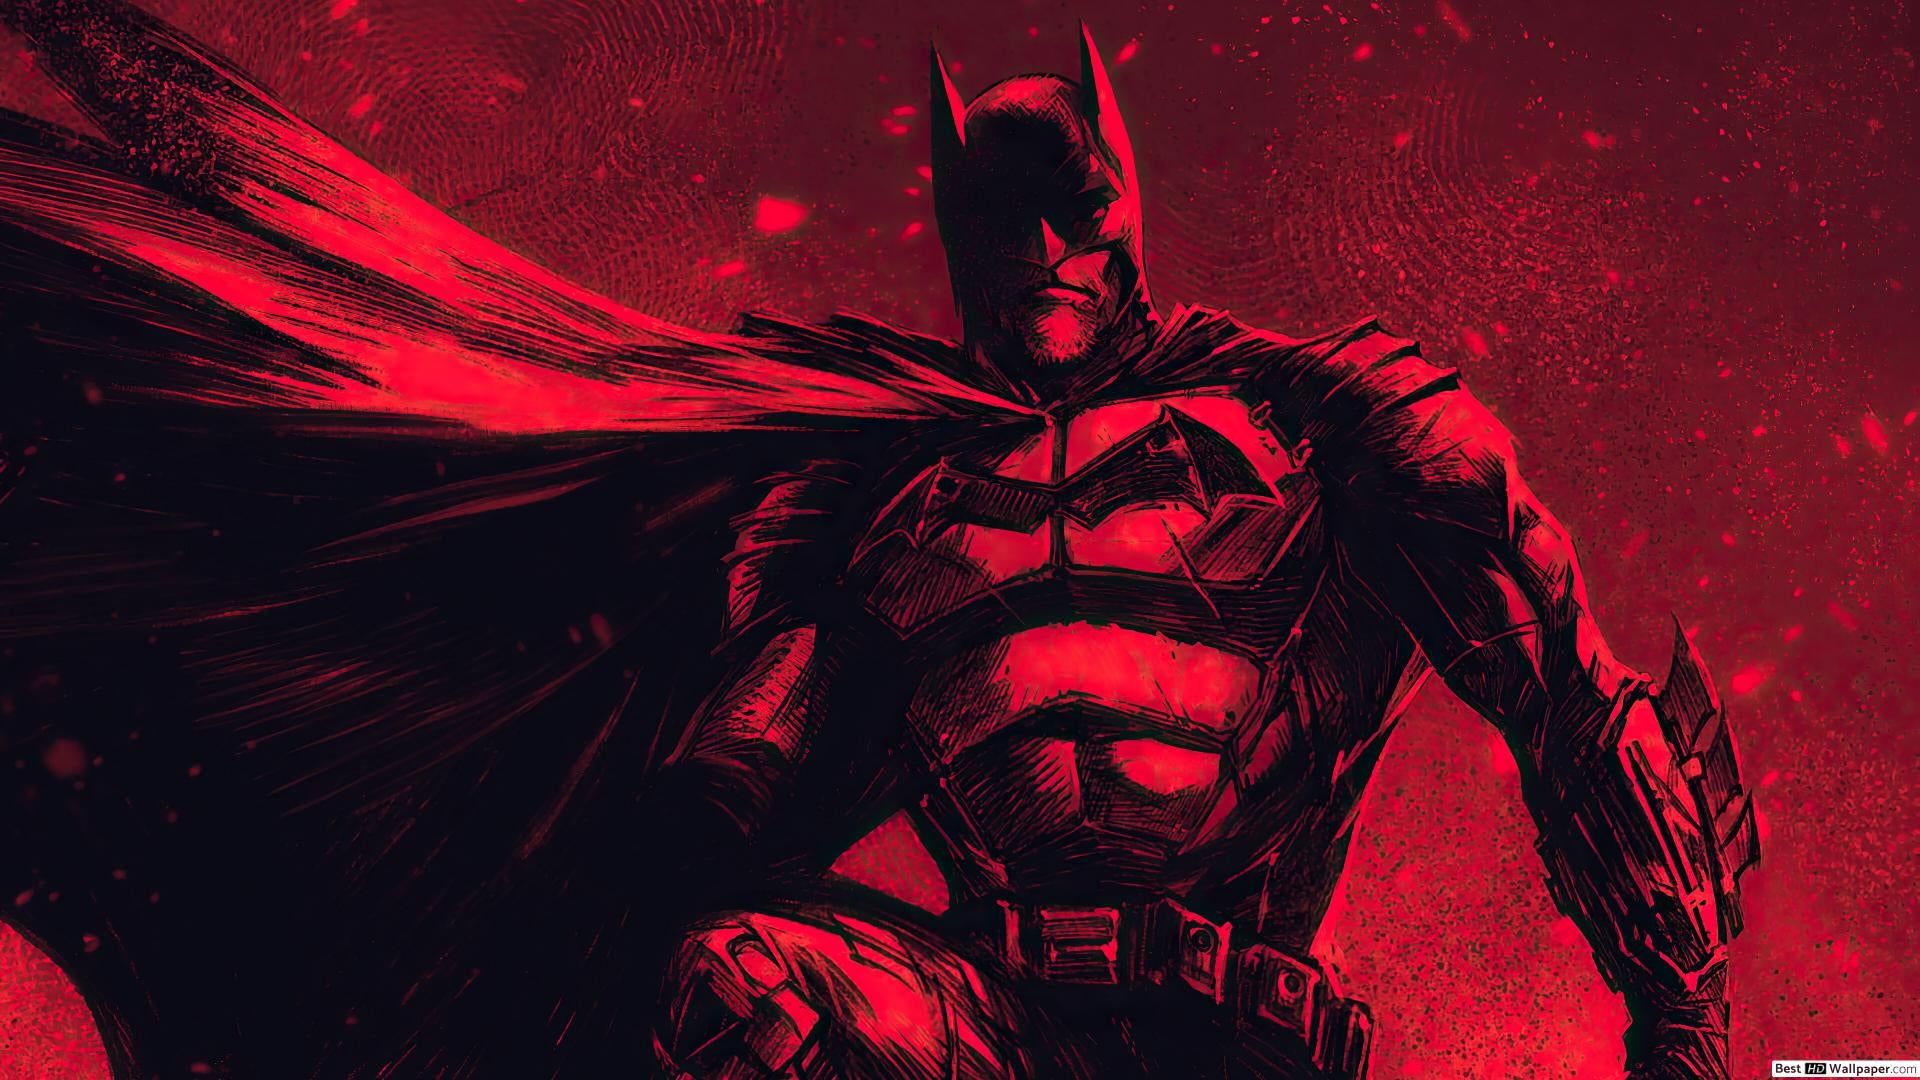 The Batman 2022 Wallpaper Free The Batman 2022 Background